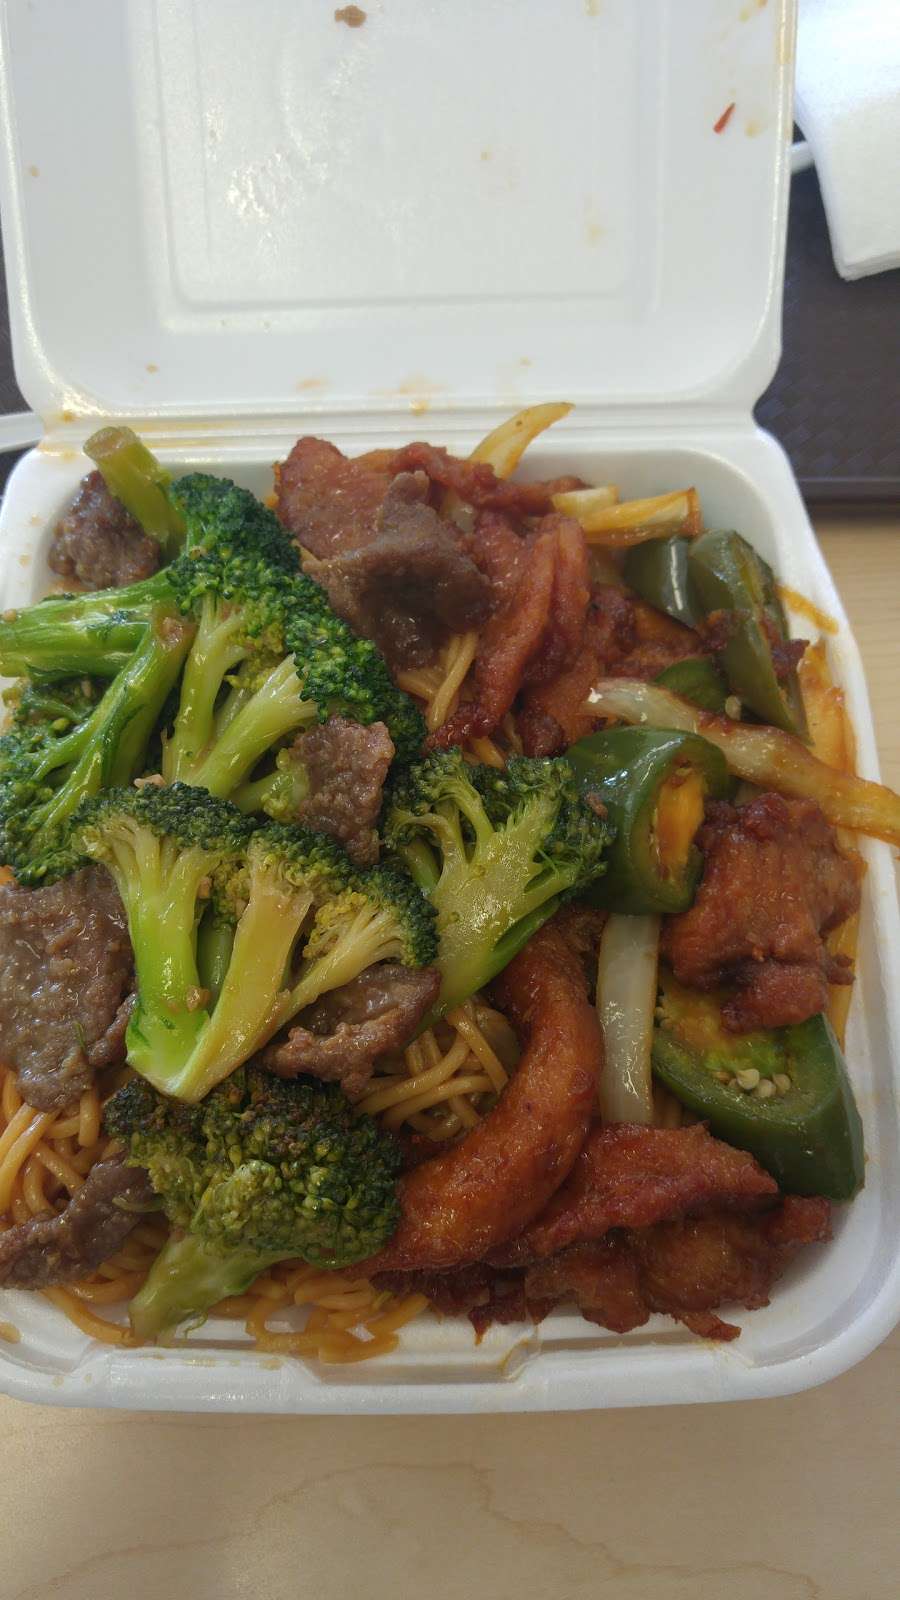 Ho Ho Chinese Food | 3511 Madison St, Riverside, CA 92504 | Phone: (951) 637-2411